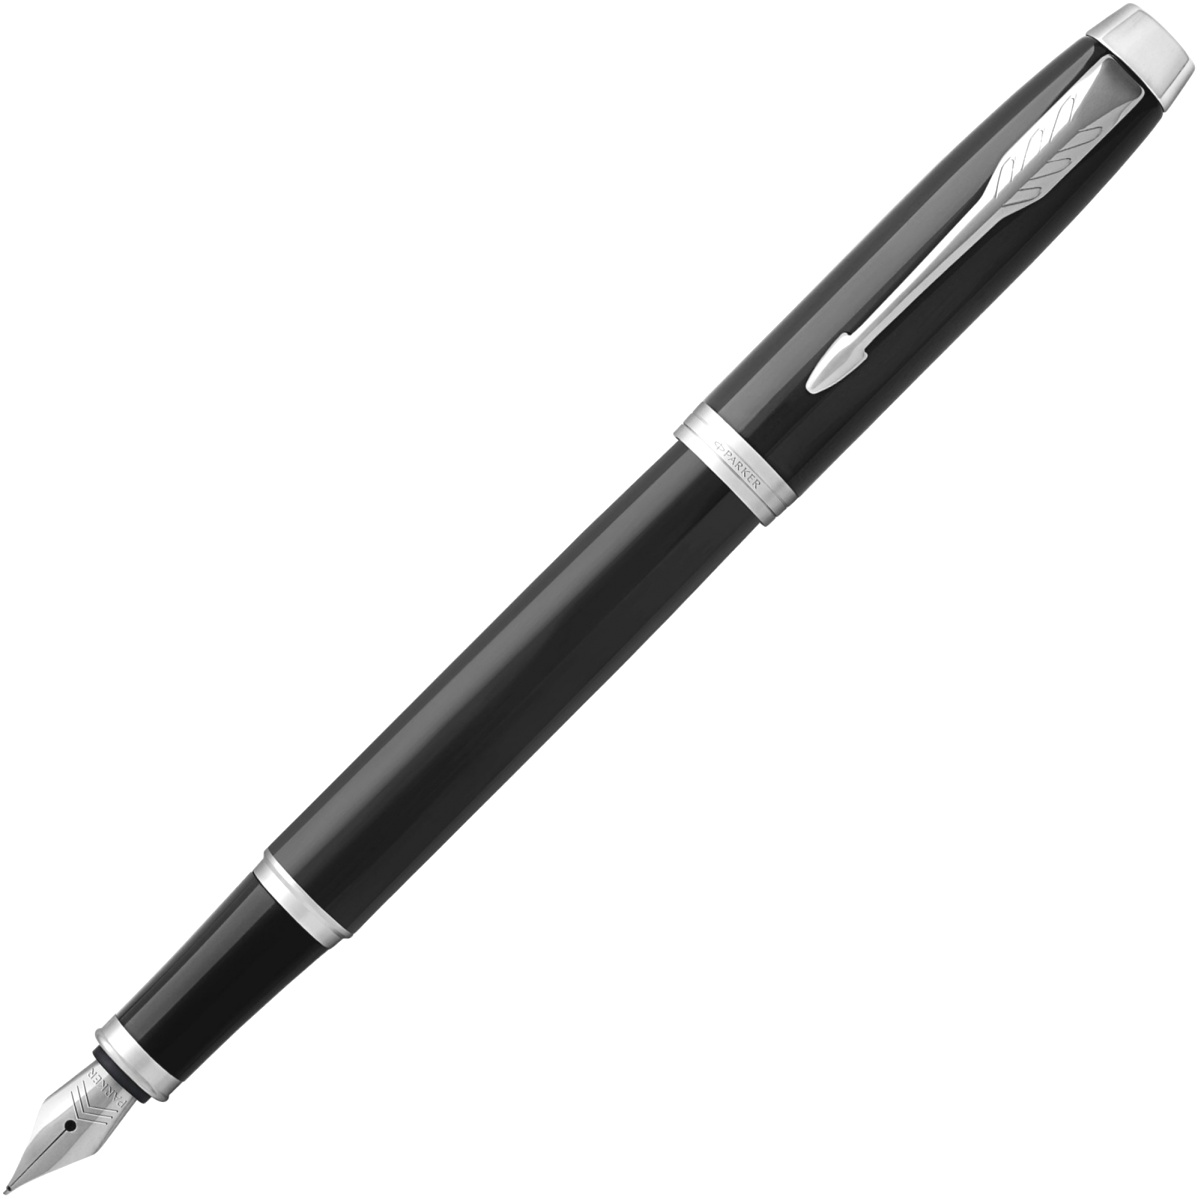  Набор Parker 2020: ручка перьевая Parker IM Core F321, Black CT (Перо M) + чехол для ручки, фото 4